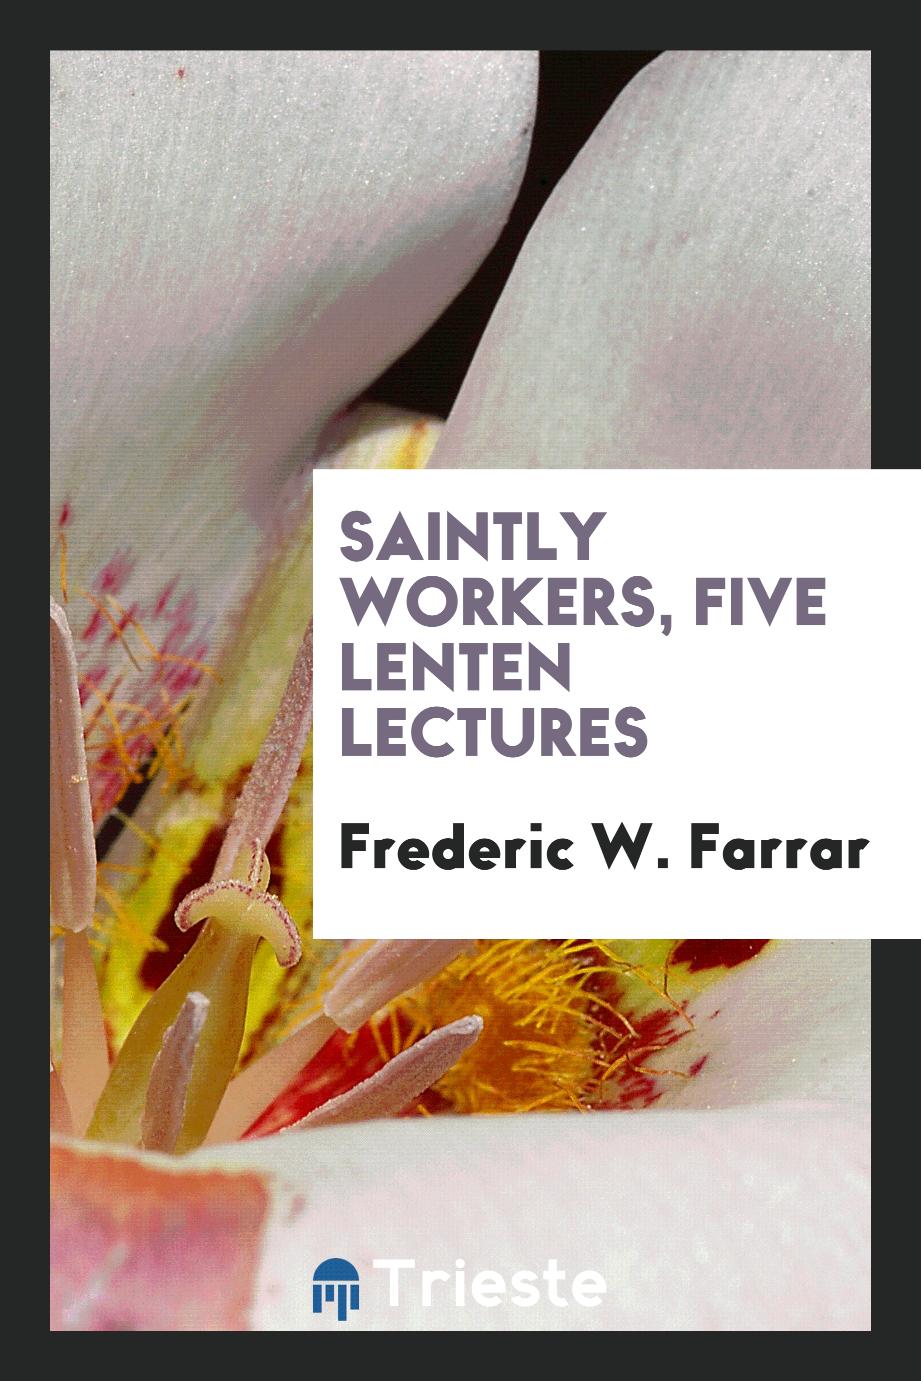 Saintly Workers, Five Lenten Lectures